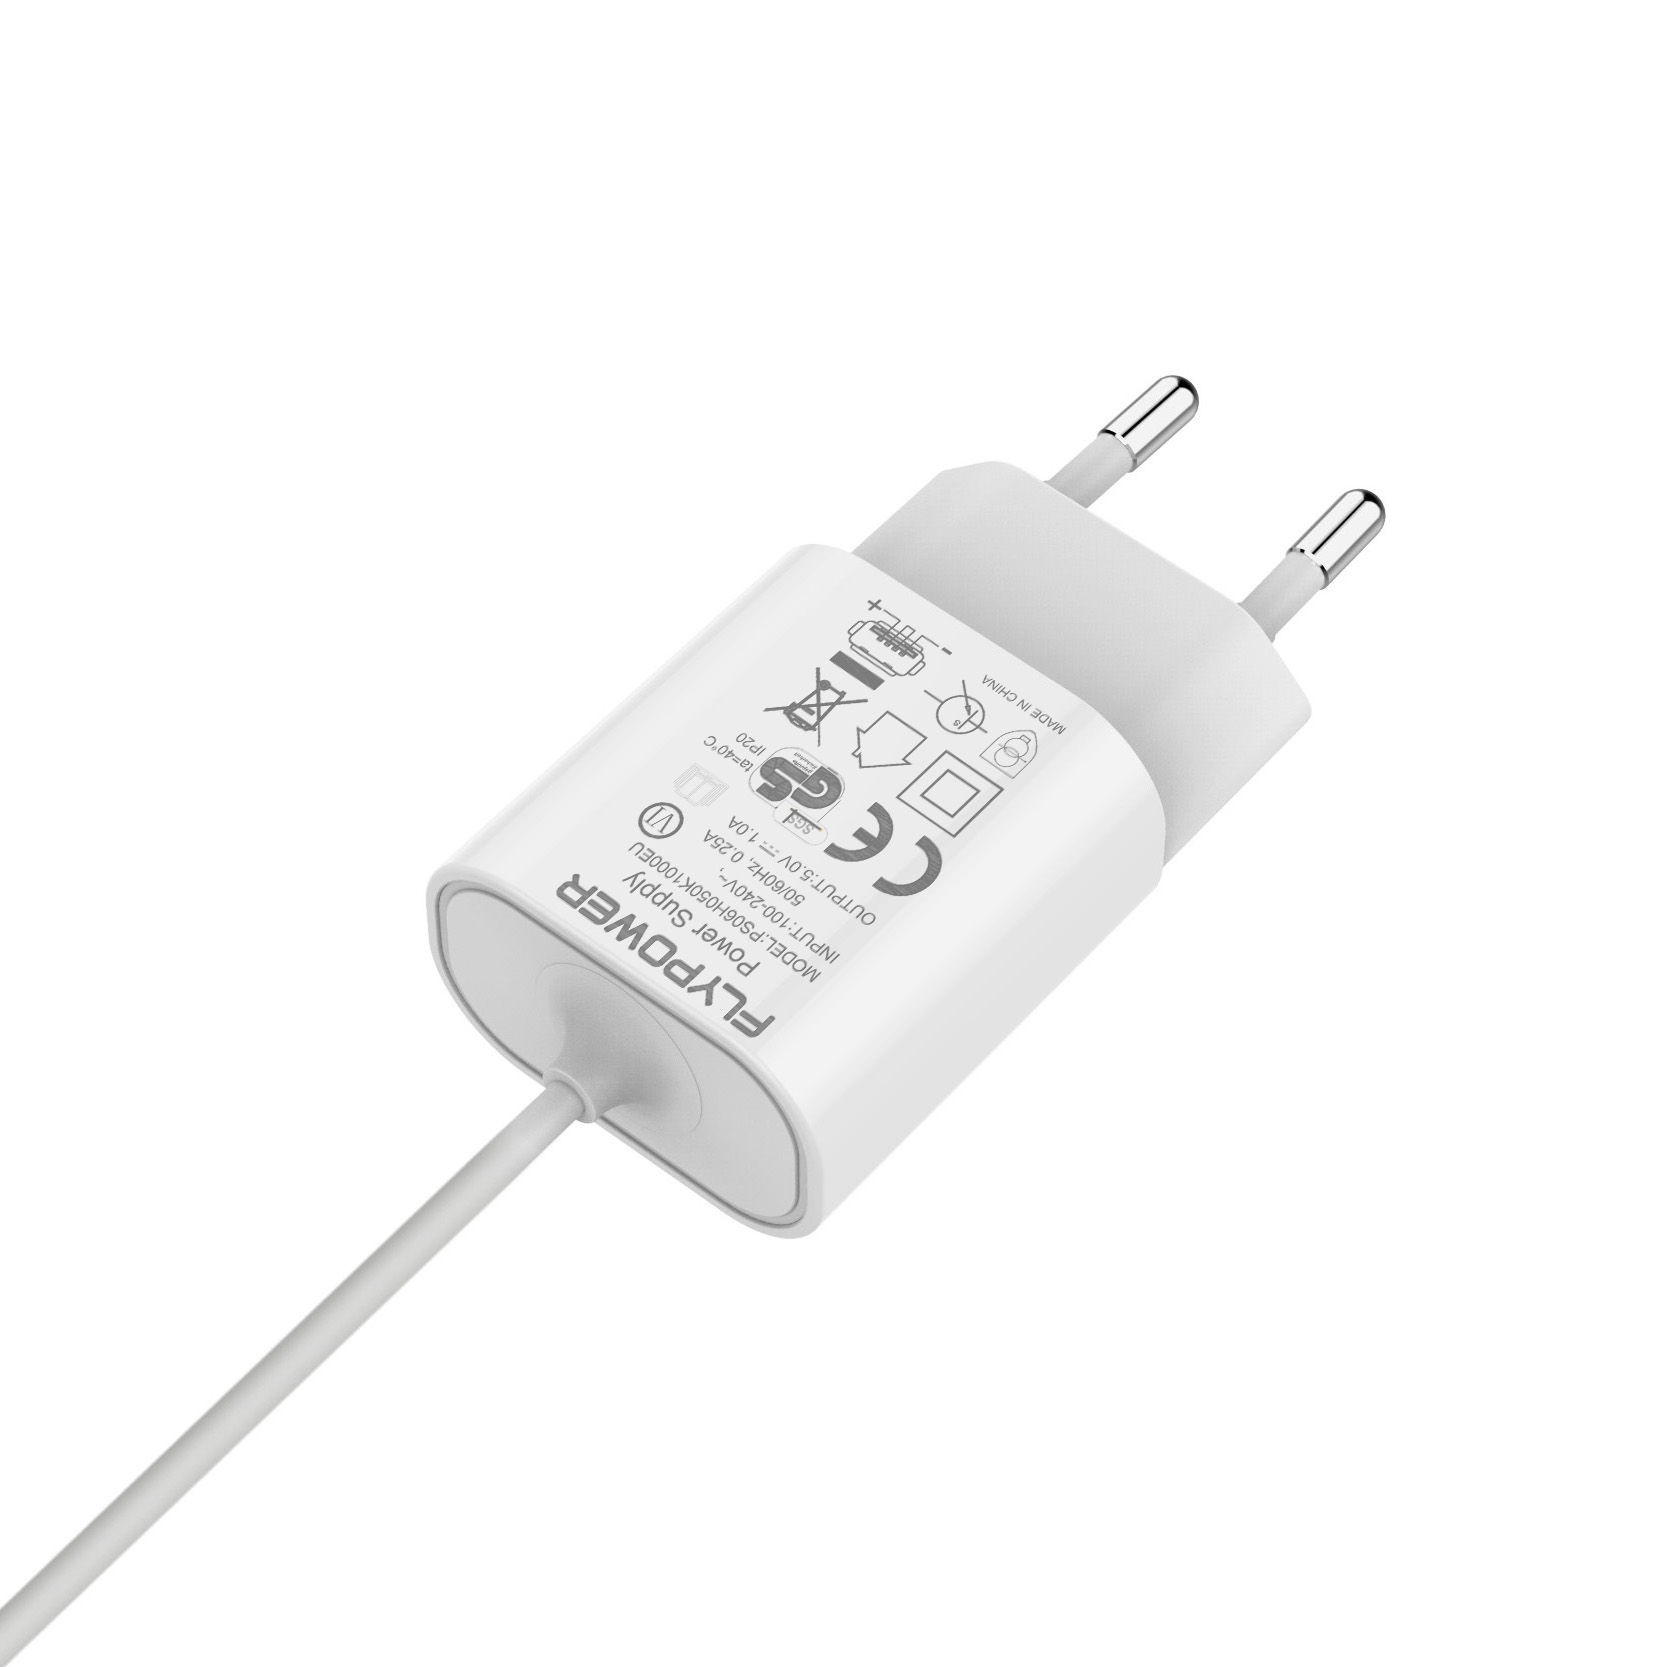 3V0.5A CE USB power supply white